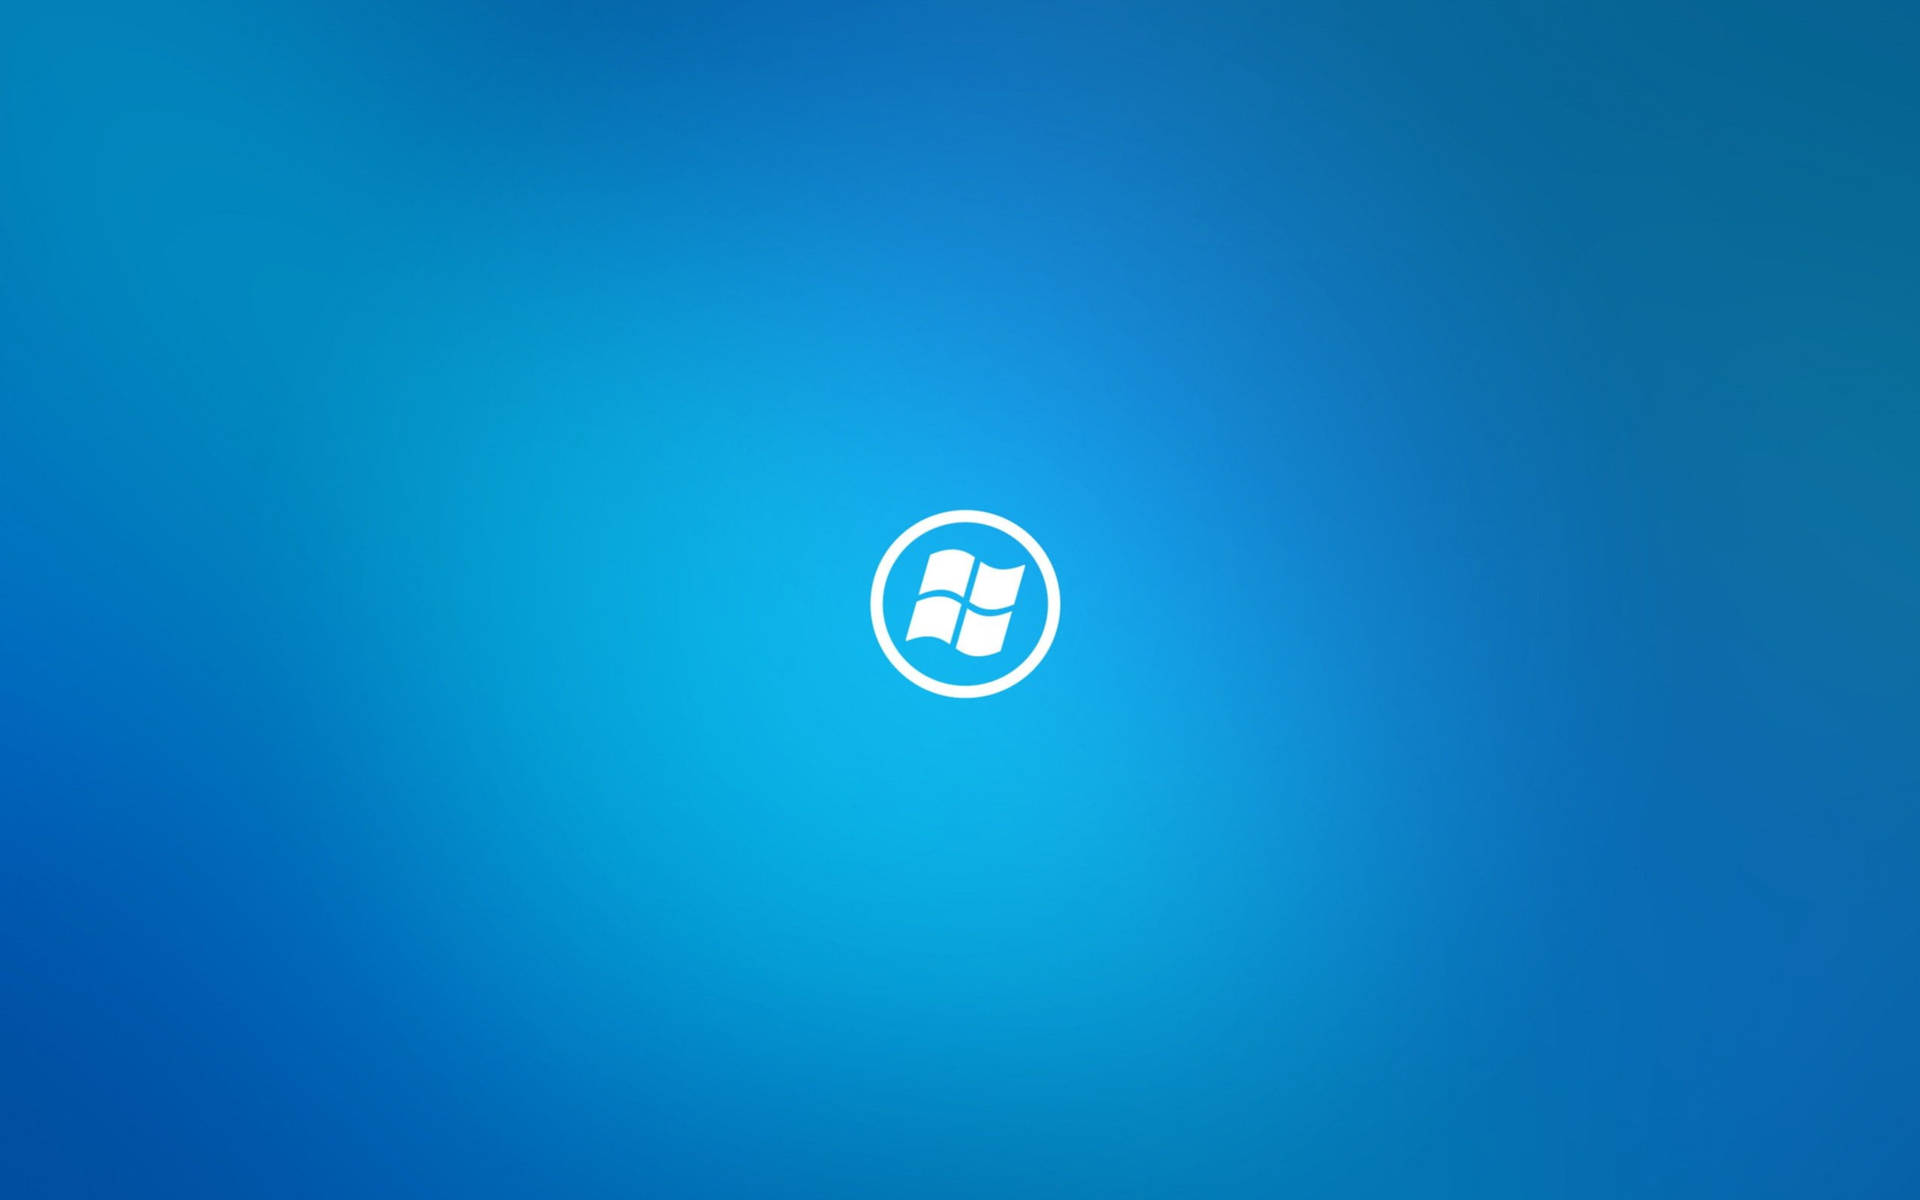 Plain Blue Windows Logo Background